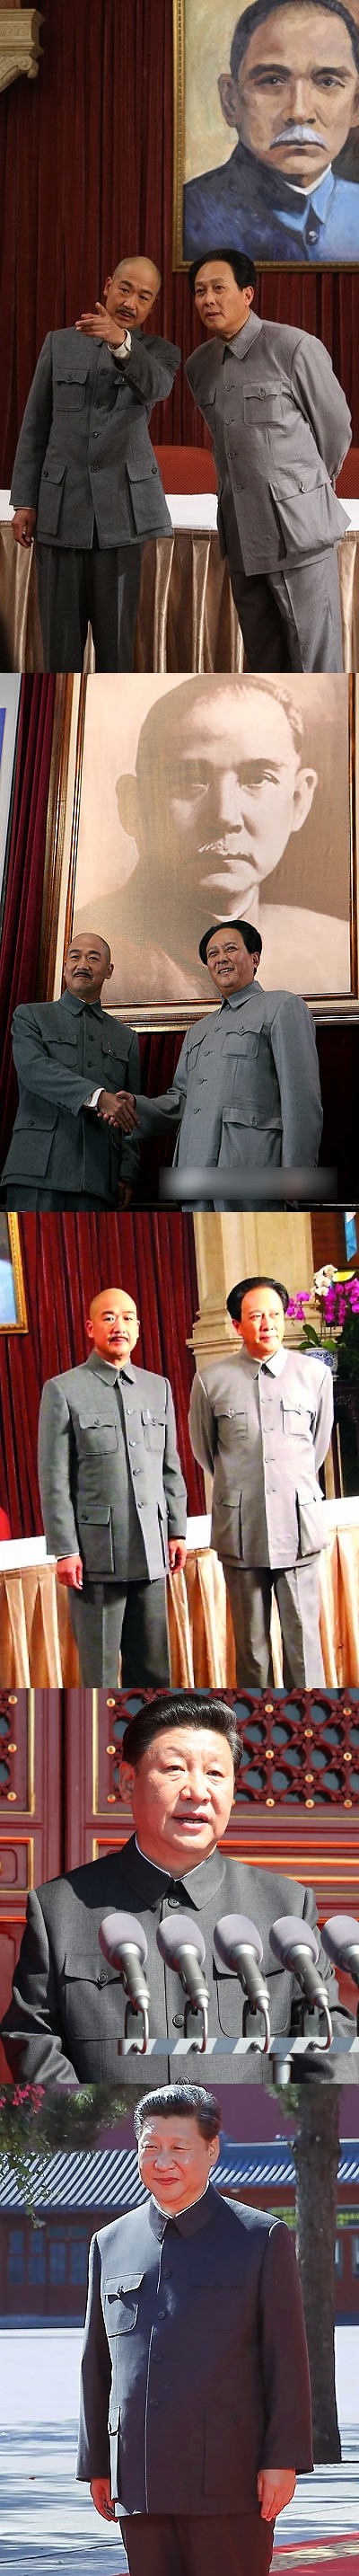 Bargain - Mao Jacket - Style 1 (Light Grey)